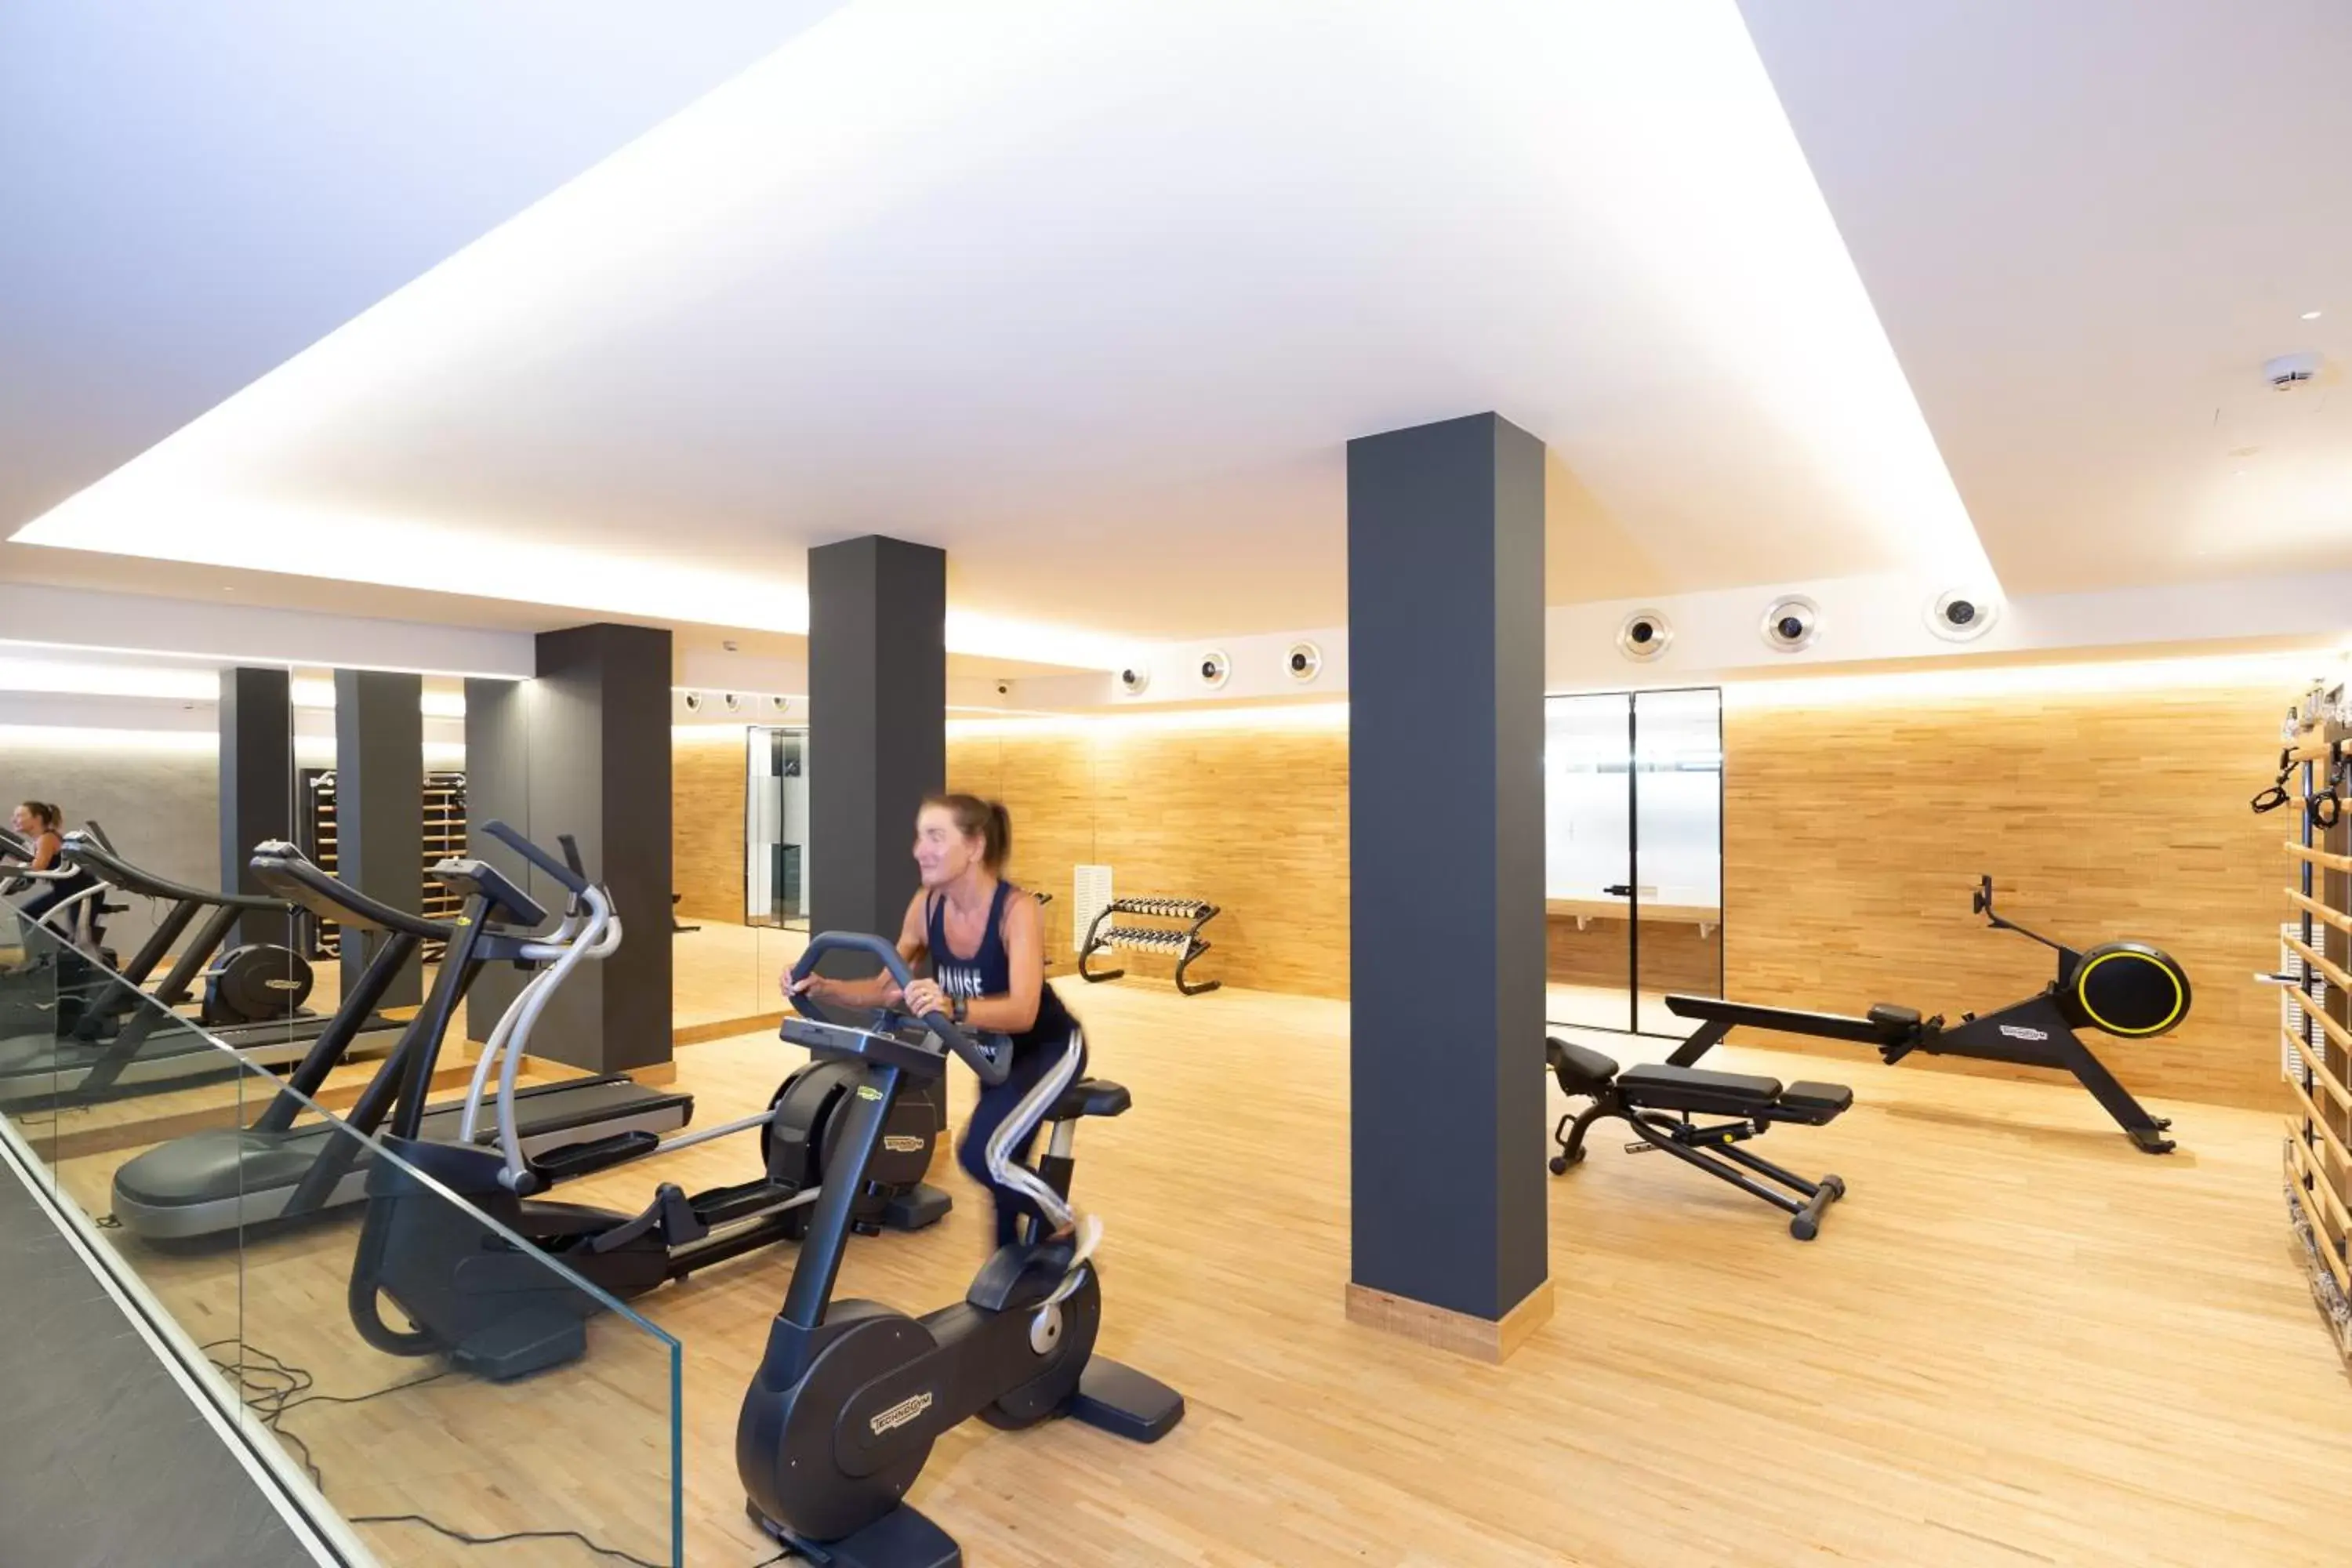 Fitness centre/facilities, Fitness Center/Facilities in Ambassador Palace Hotel